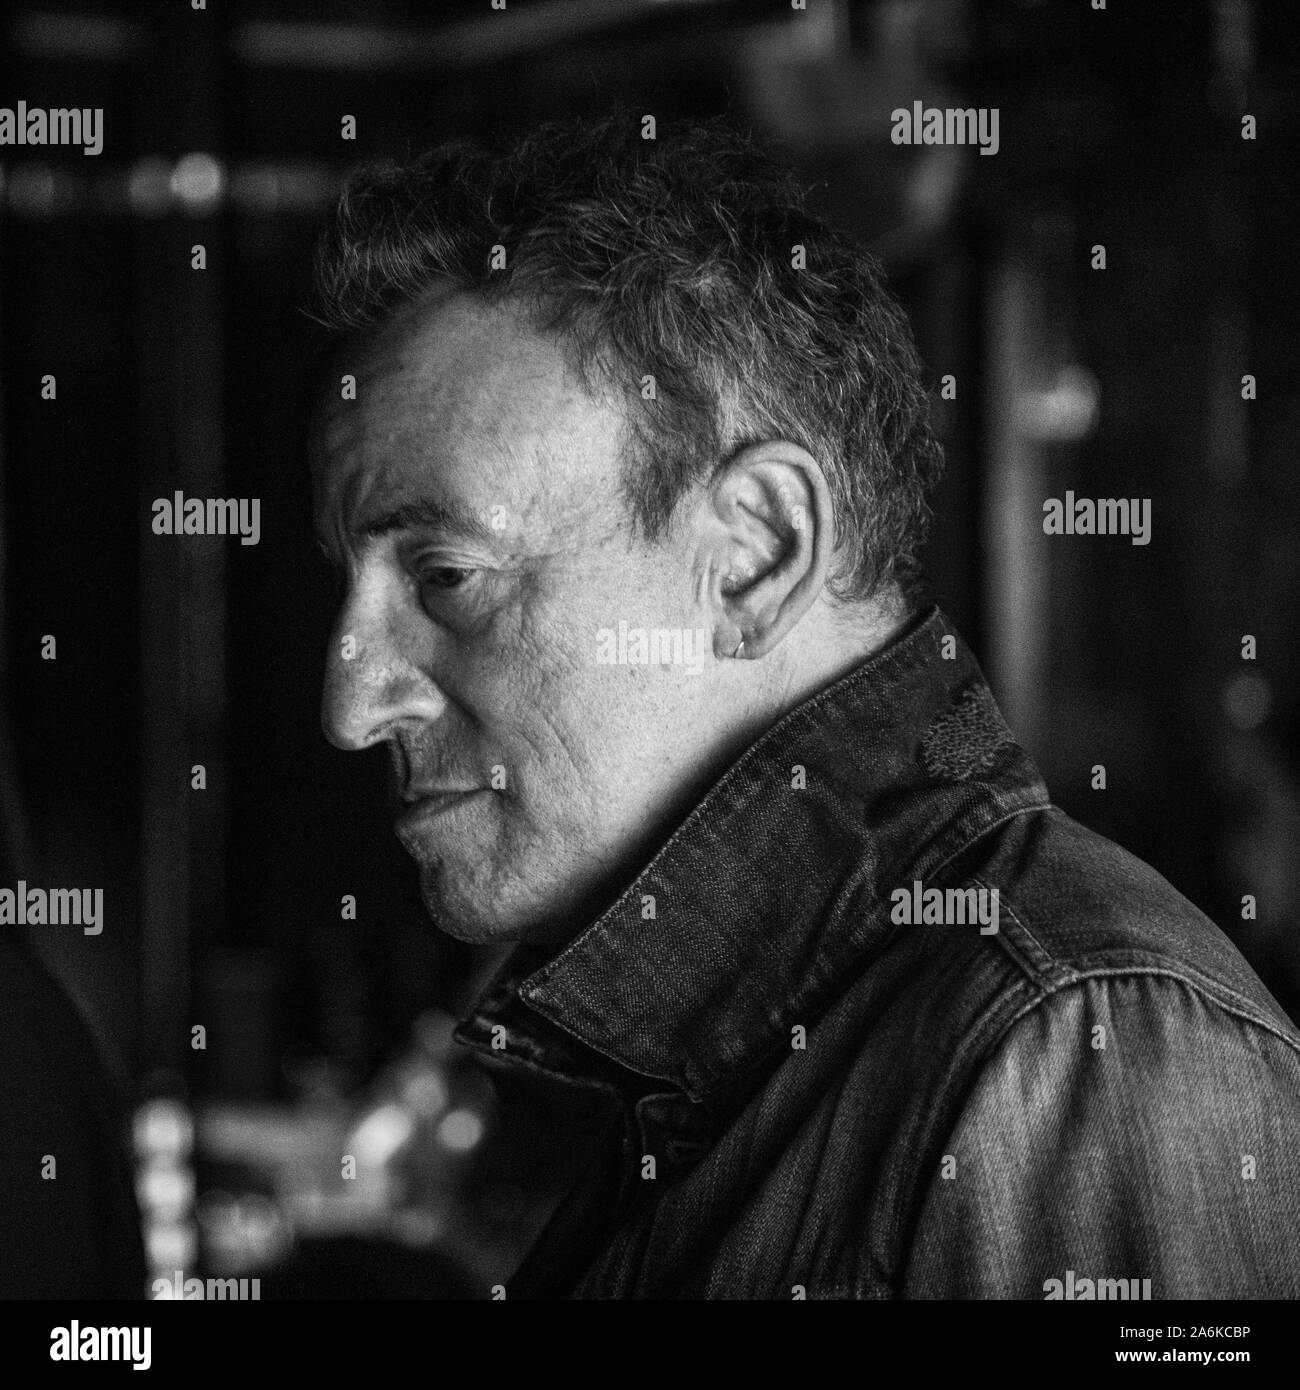 New York, NY - Nov 5th, 2018 : Bruce Springsteen backstage au Madison Square Garden. Photographié par Robin Sato pour l'NY Comedy Festival Banque D'Images